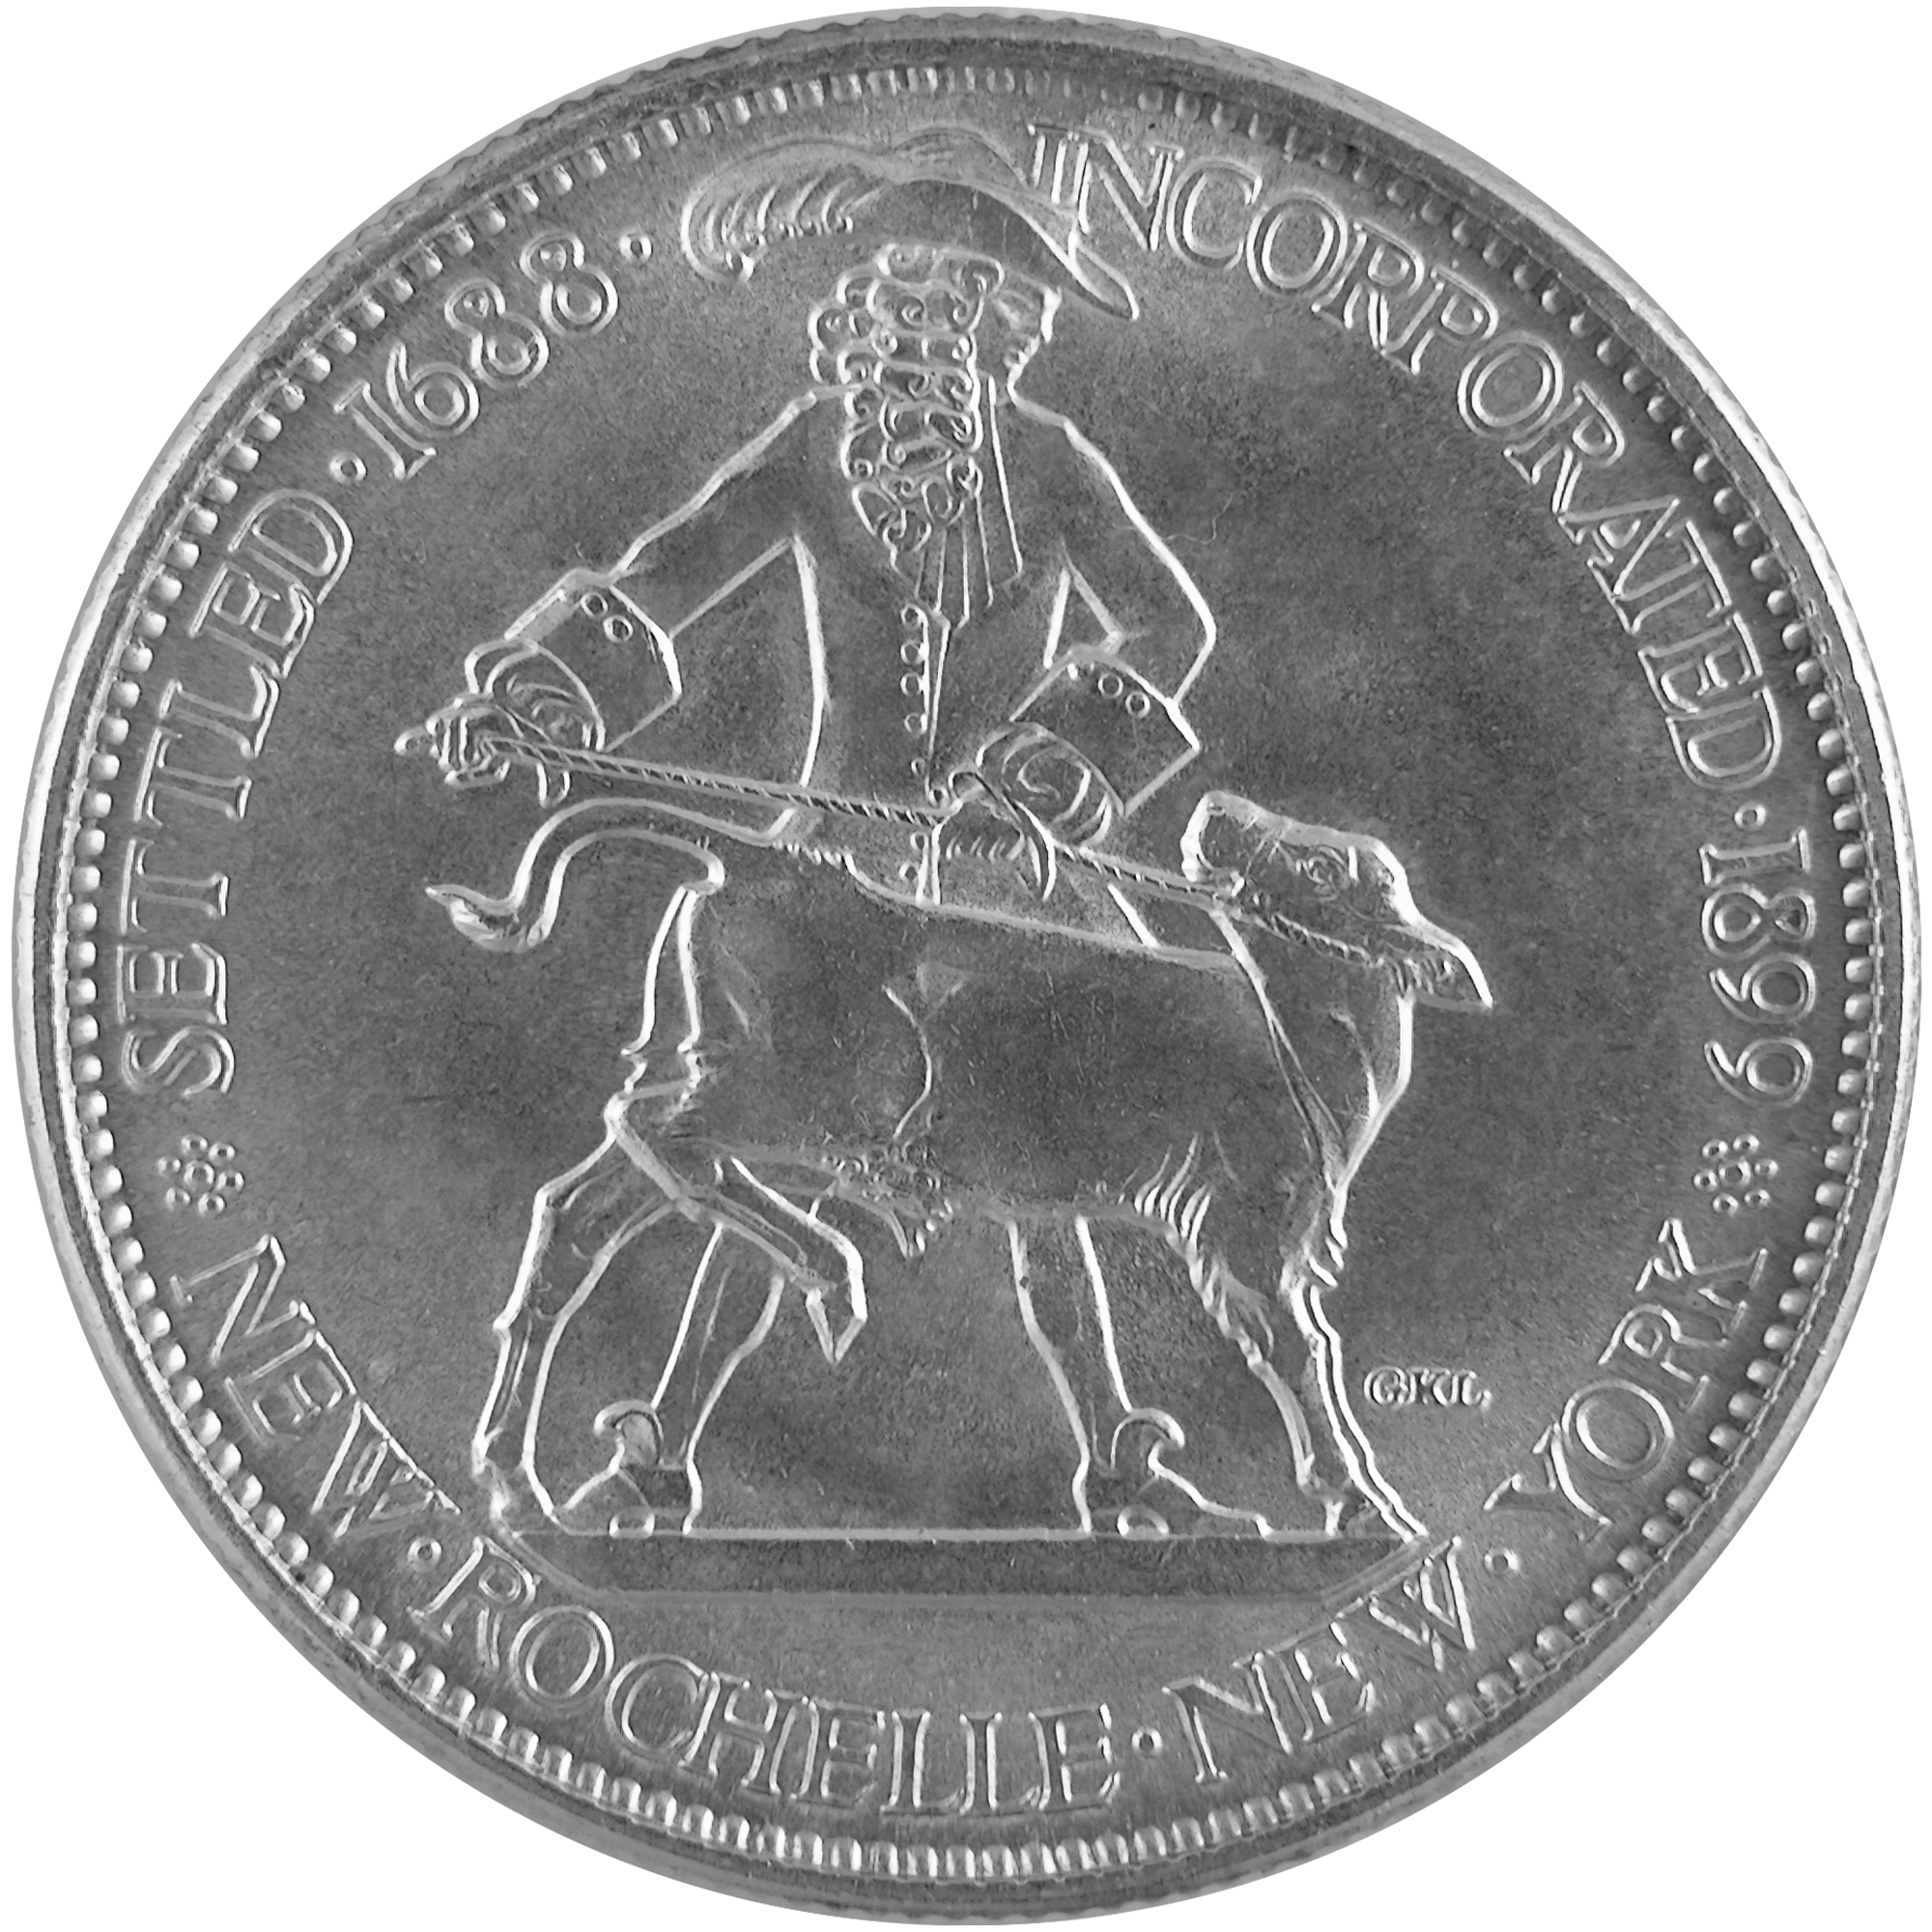 1938 New Rochelle New York Commemorative Silver Half Dollar Coin Obverse